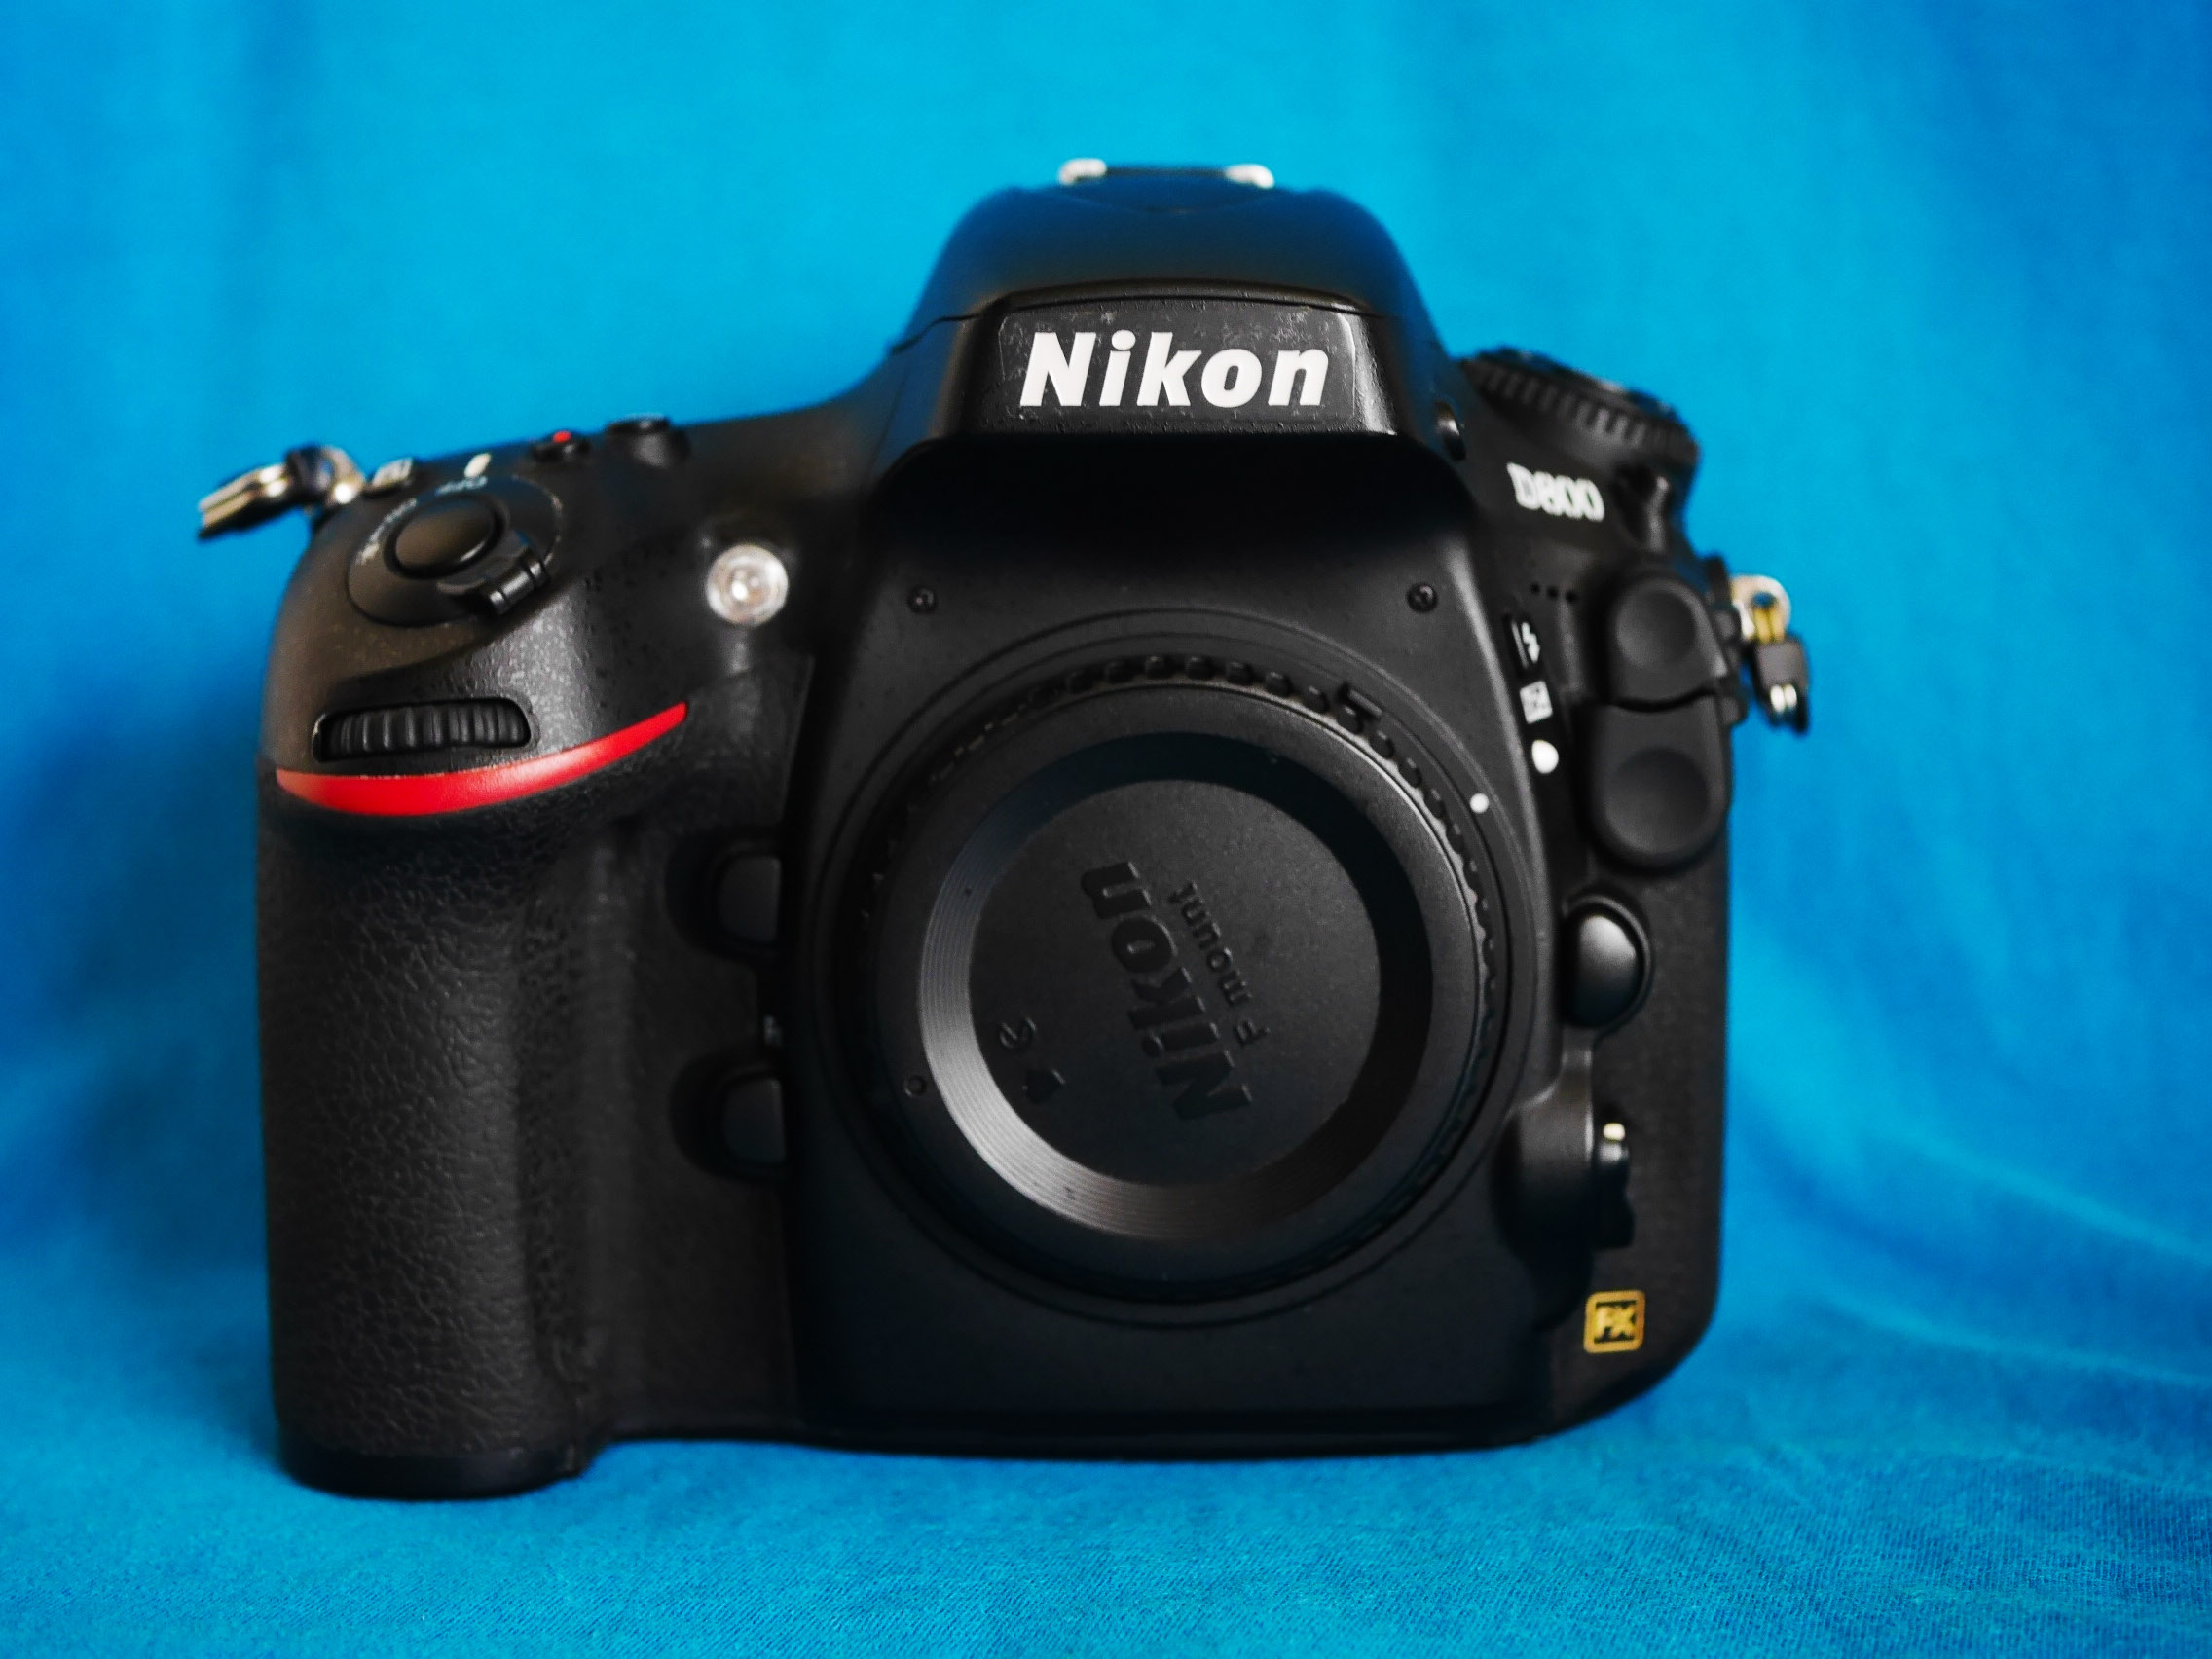 Nikon D800 36.3MP Professional DSLR Camera - ตัวกล้อง Black Body, Dual card slots, Full Frame Digital SLR CMOS FX-Format